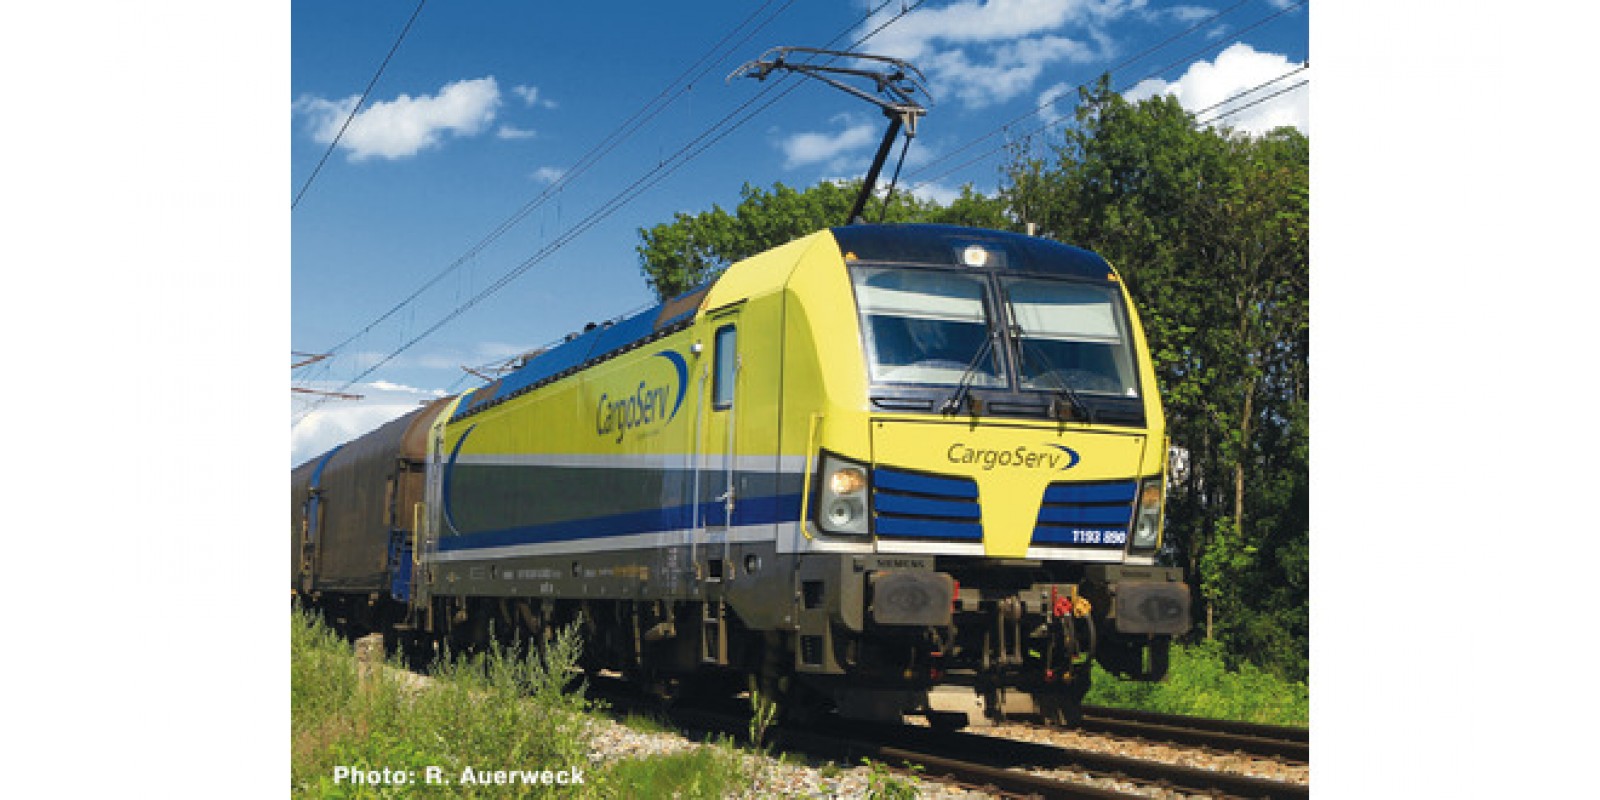 RO73923 - Electric locomotive 1193 890, Cargoserv